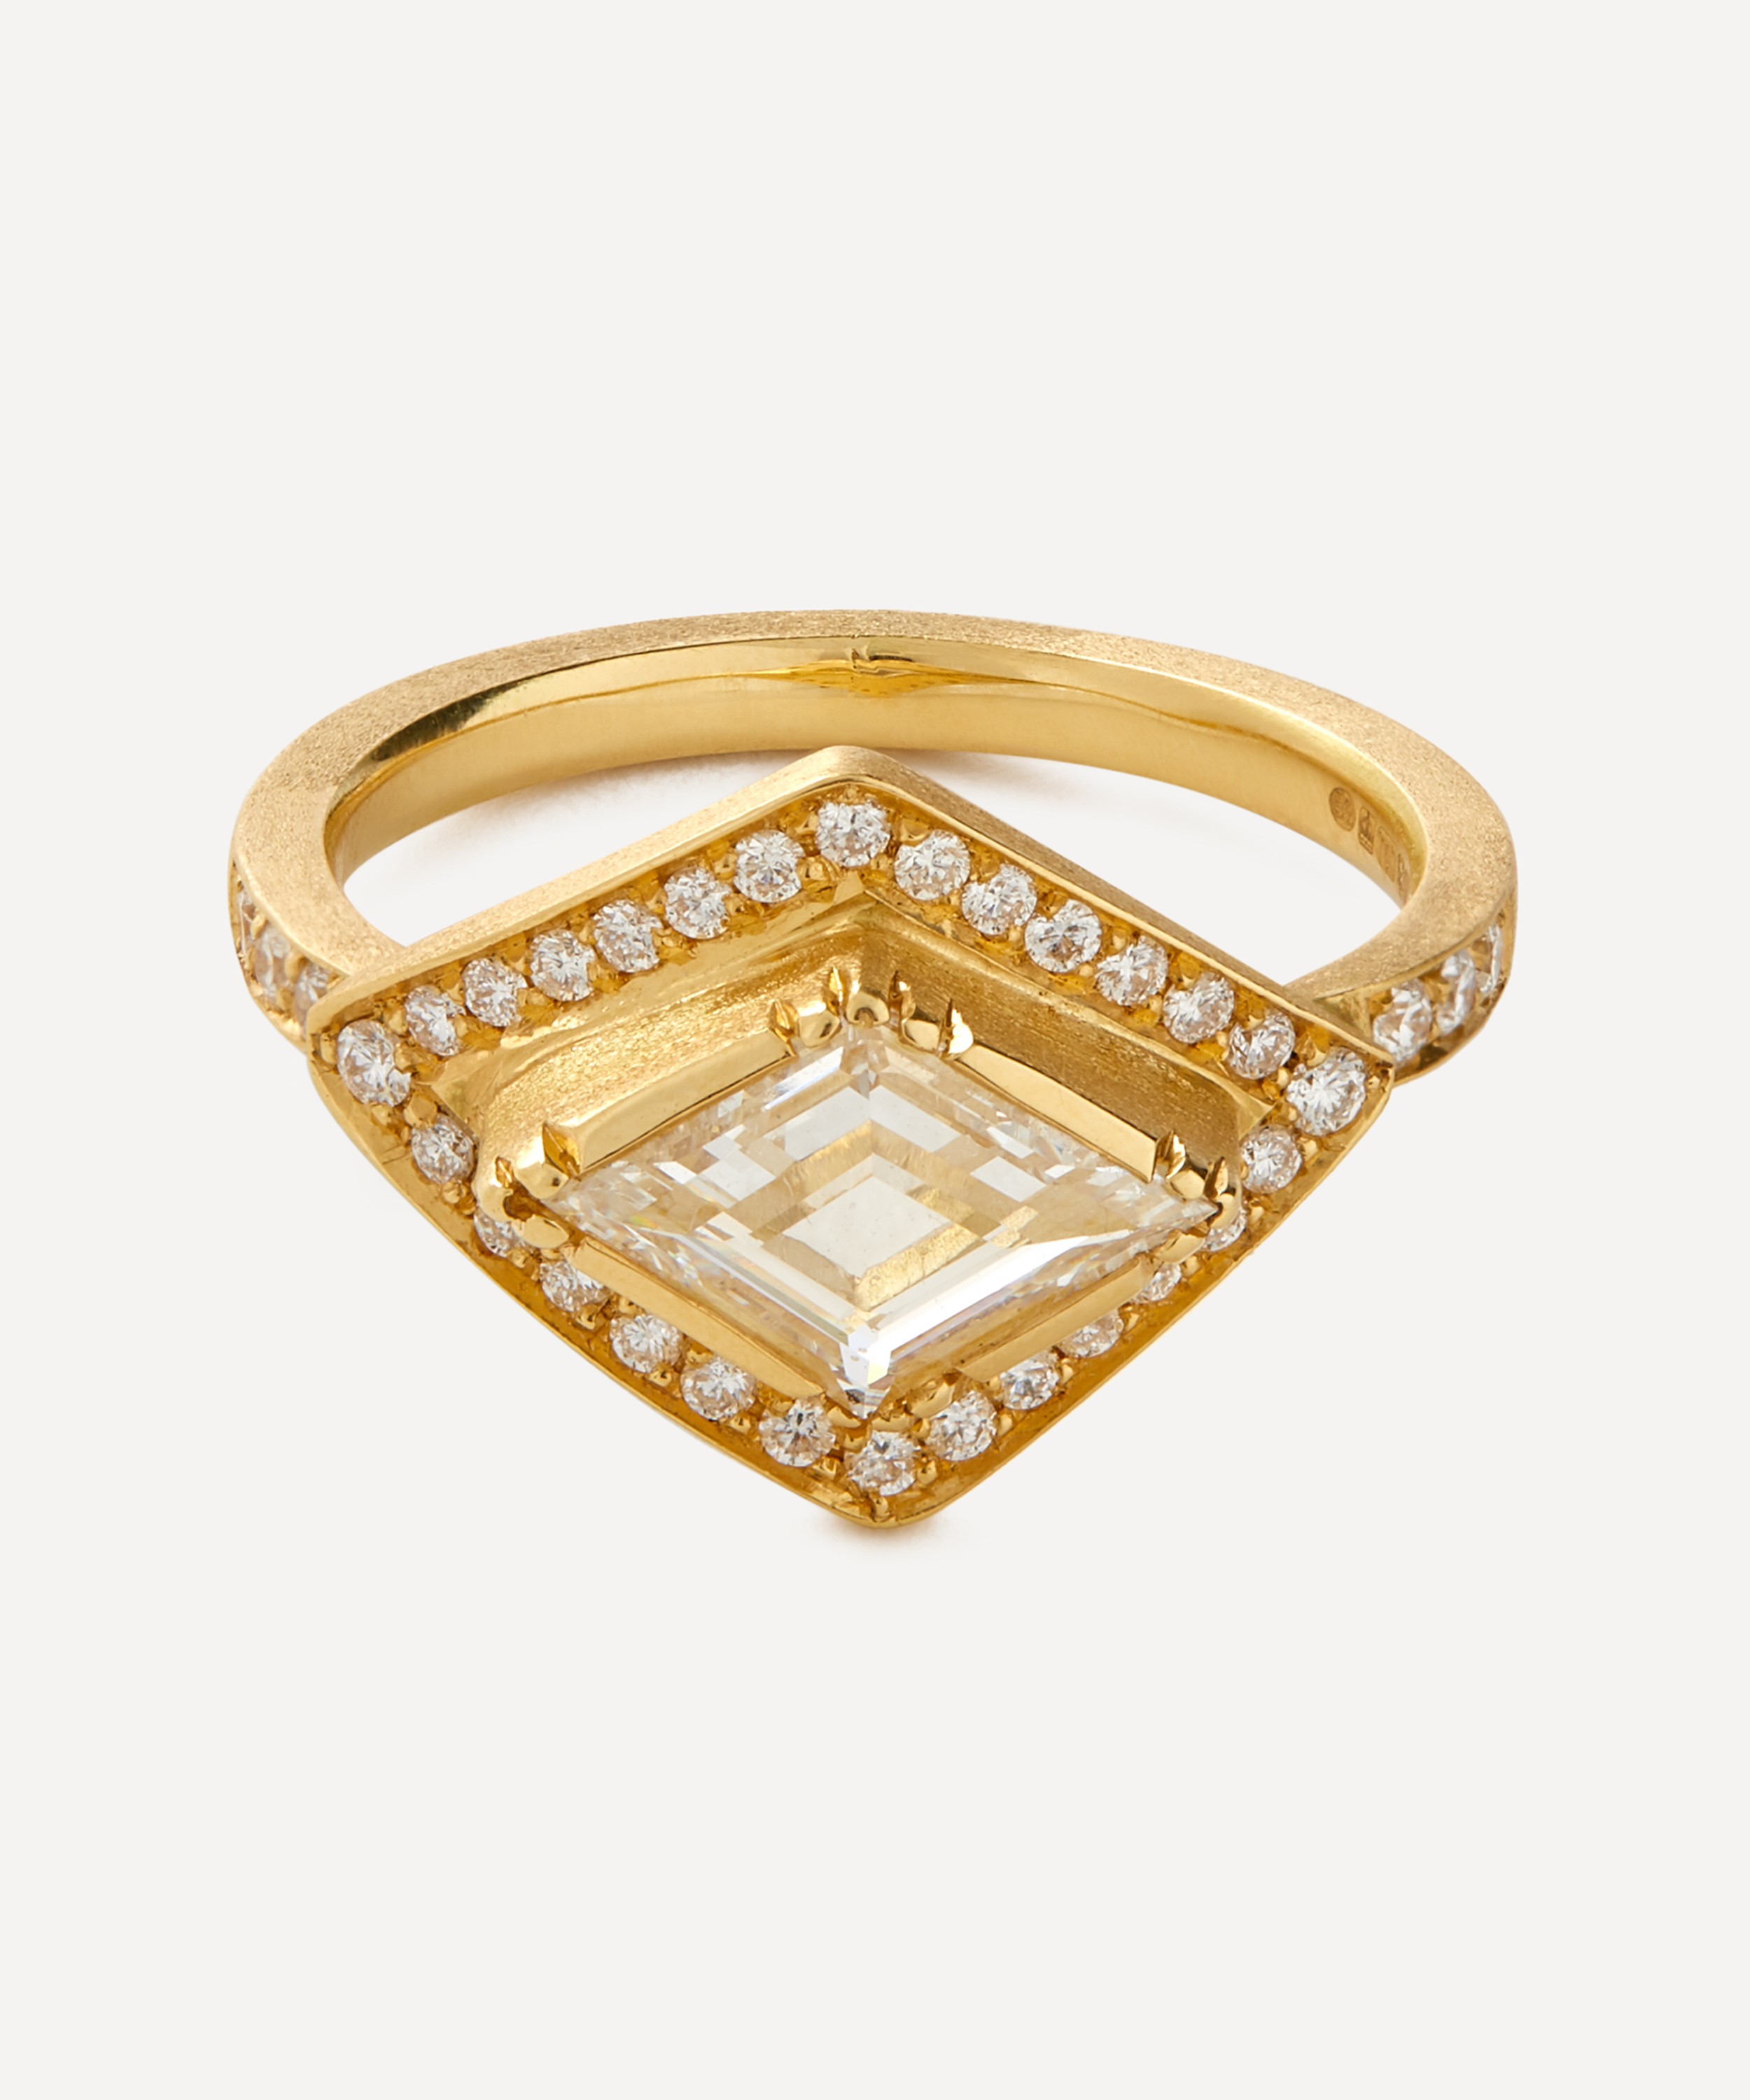 Brooke Gregson - 18ct Gold Galaxy Kite Diamond Ring